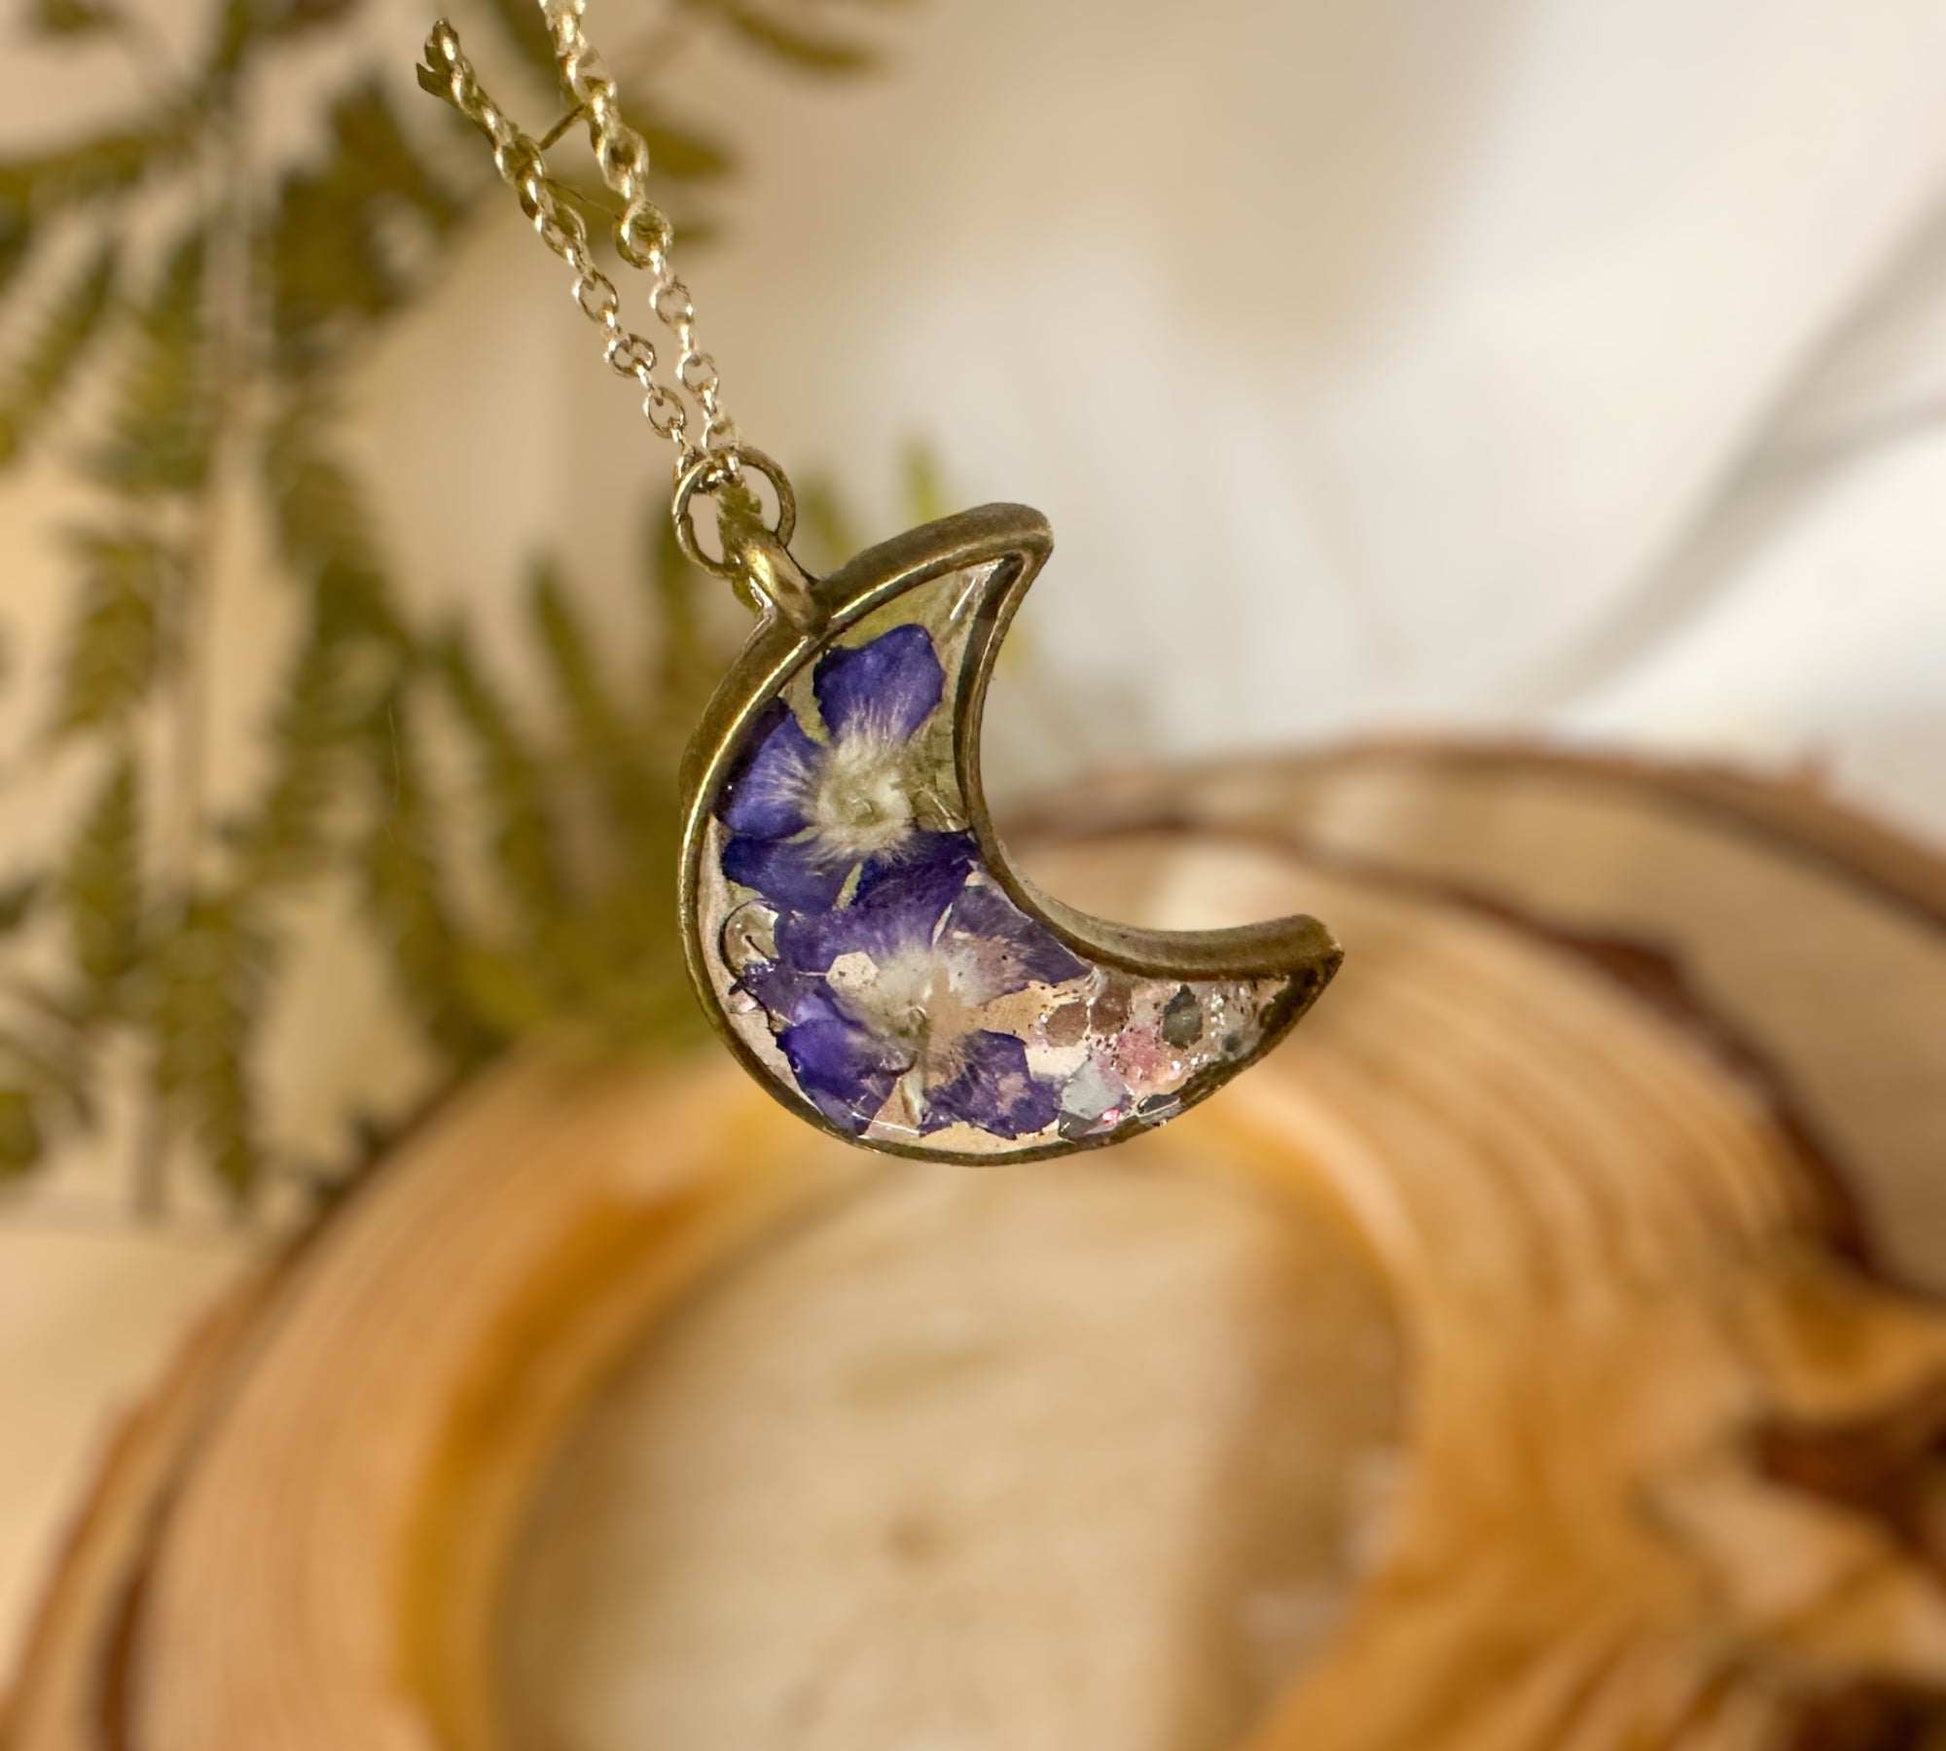 Lunar Blooms: Resin Moon Pendant Handmade with Resin & Dried Flowers  